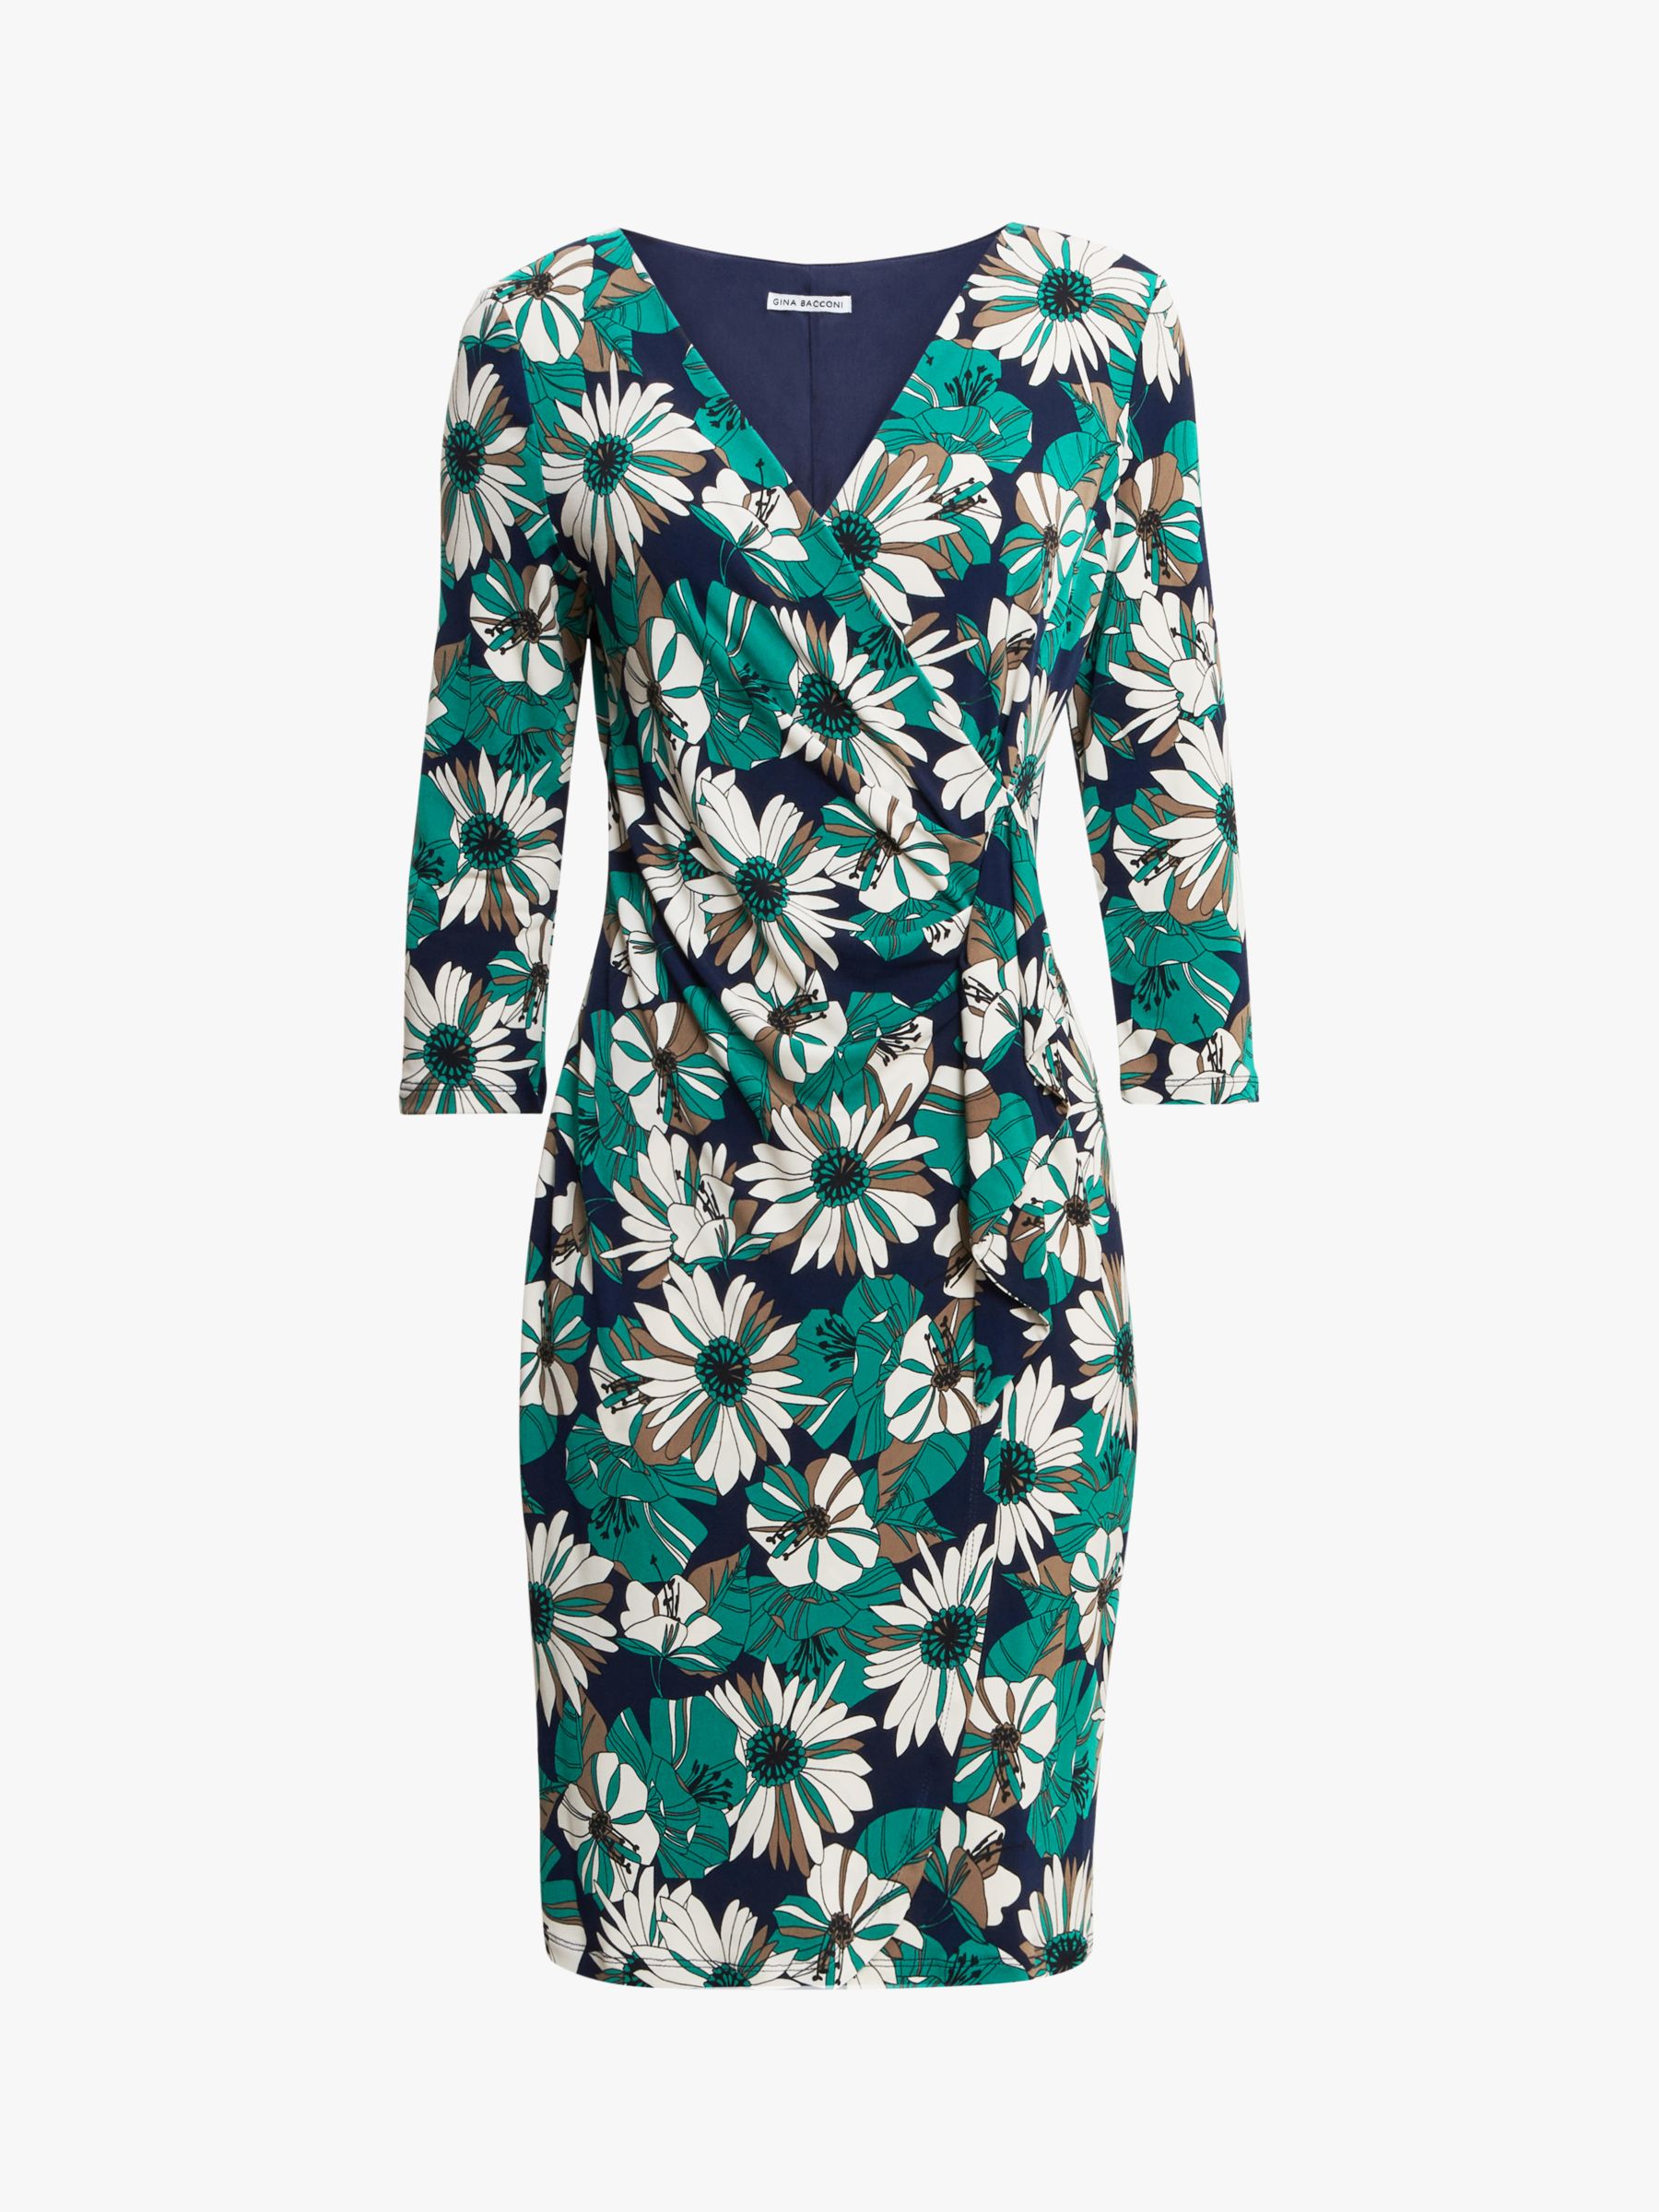 Gina Bacconi Talie Floral Print Jersey Dress, Navy/Green, 8